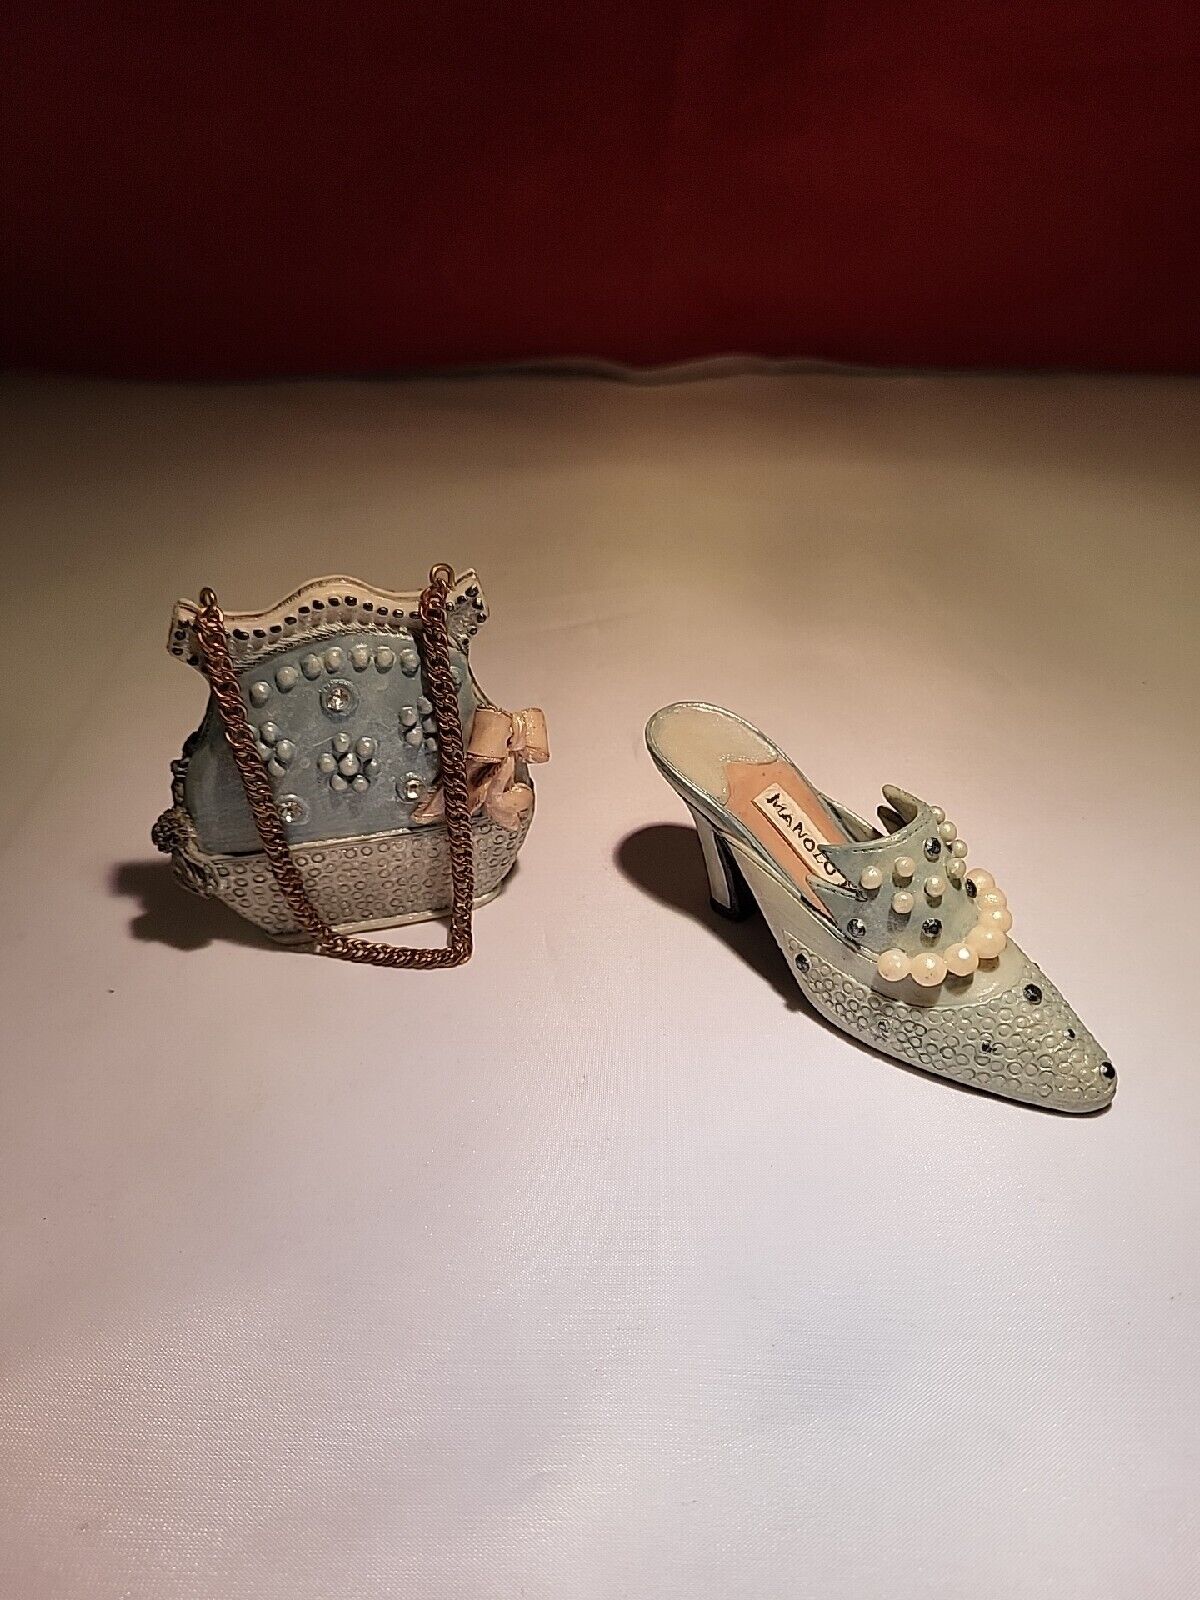 Manolo Blahnik Light Blue High Heel Shoe and Handbag Decorative Resin Figurines